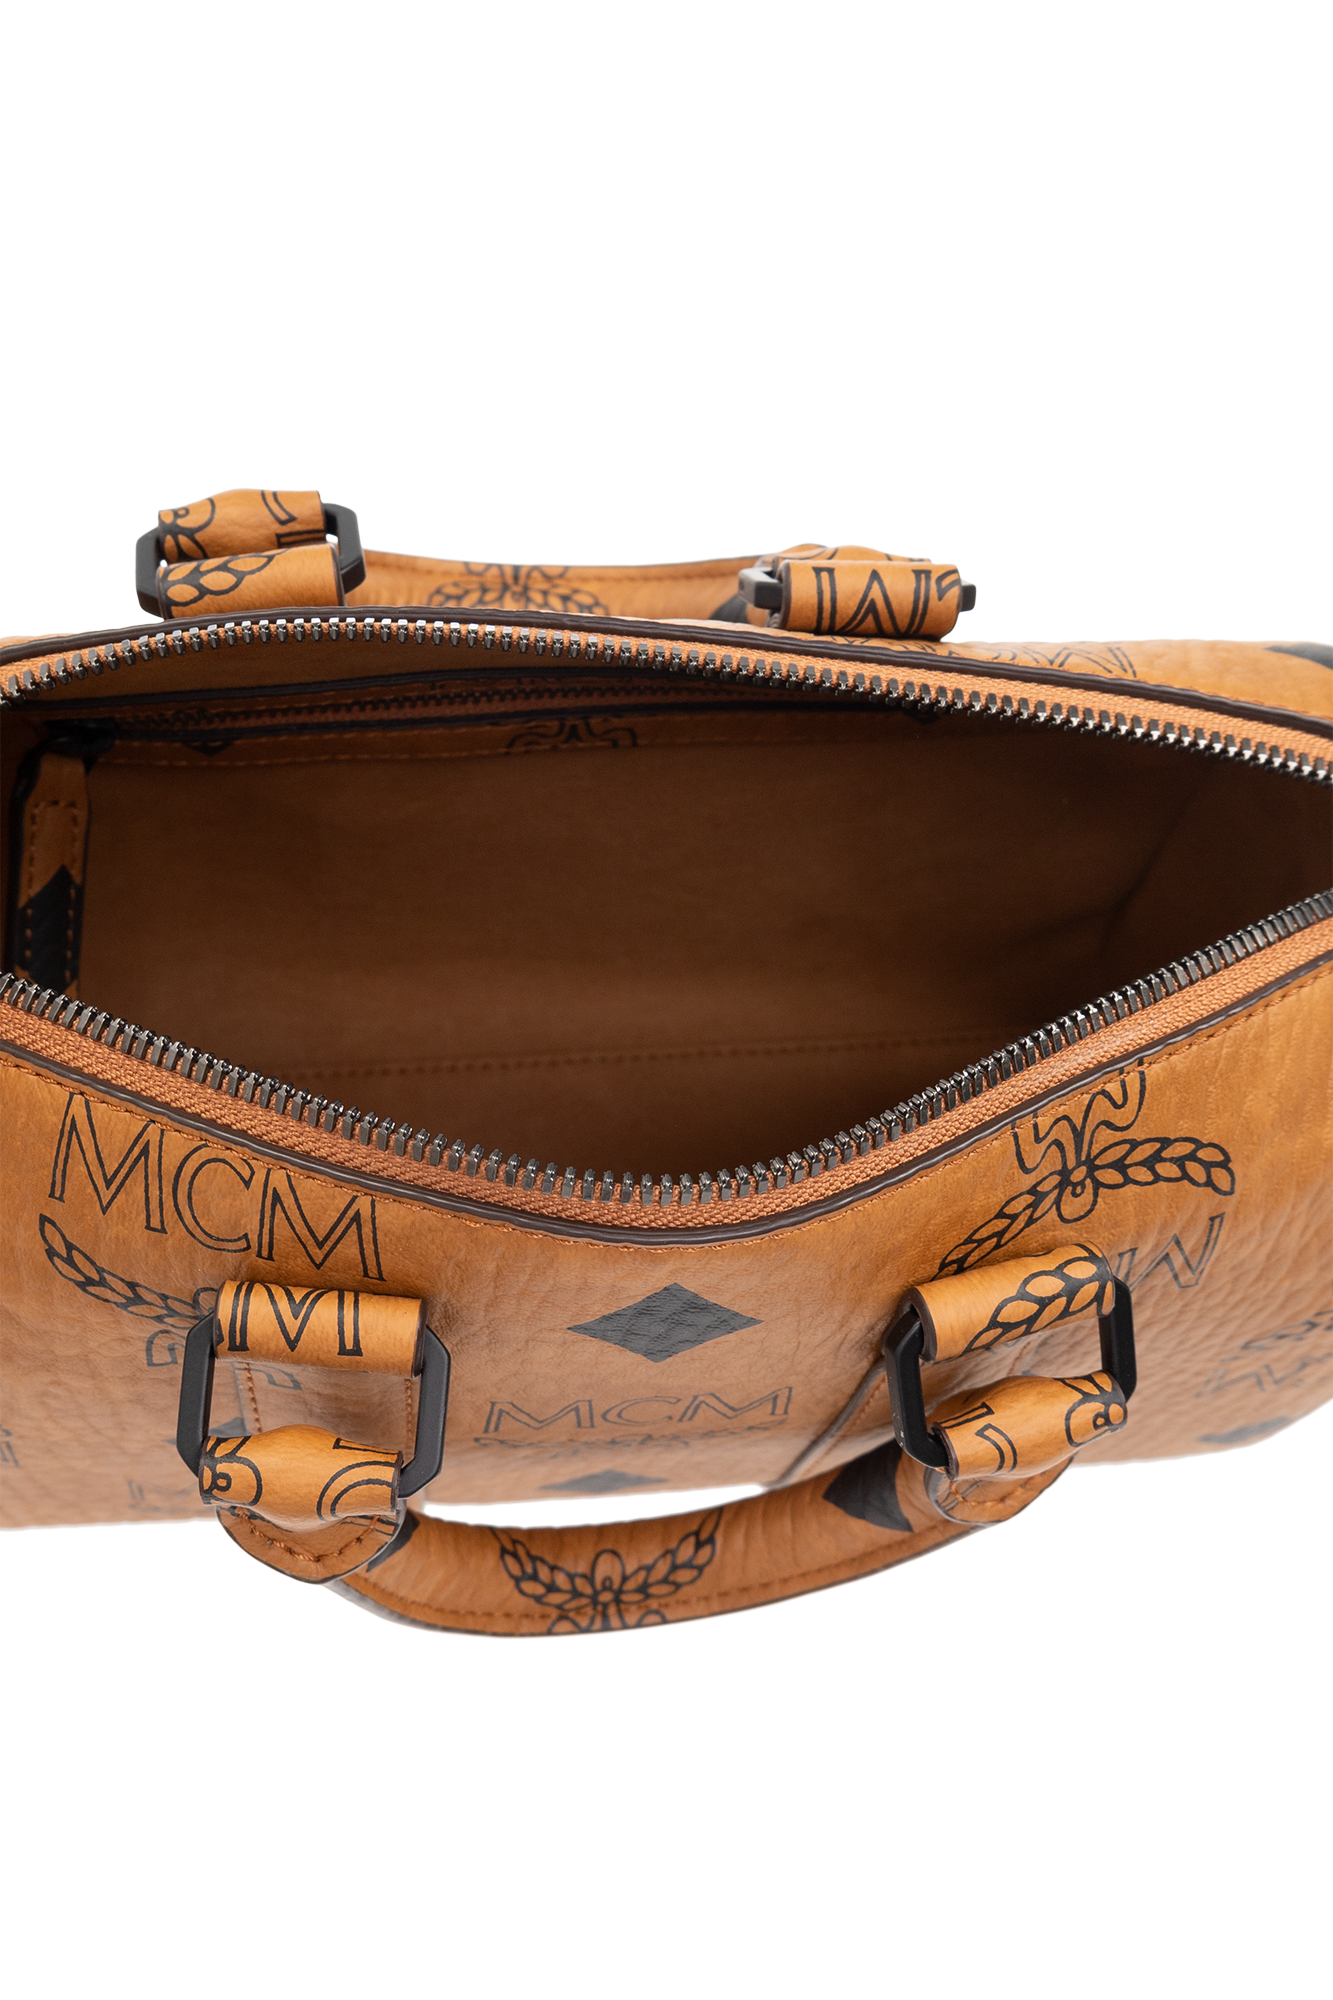 MCM ‘Aren Boston Small’ shoulder bag